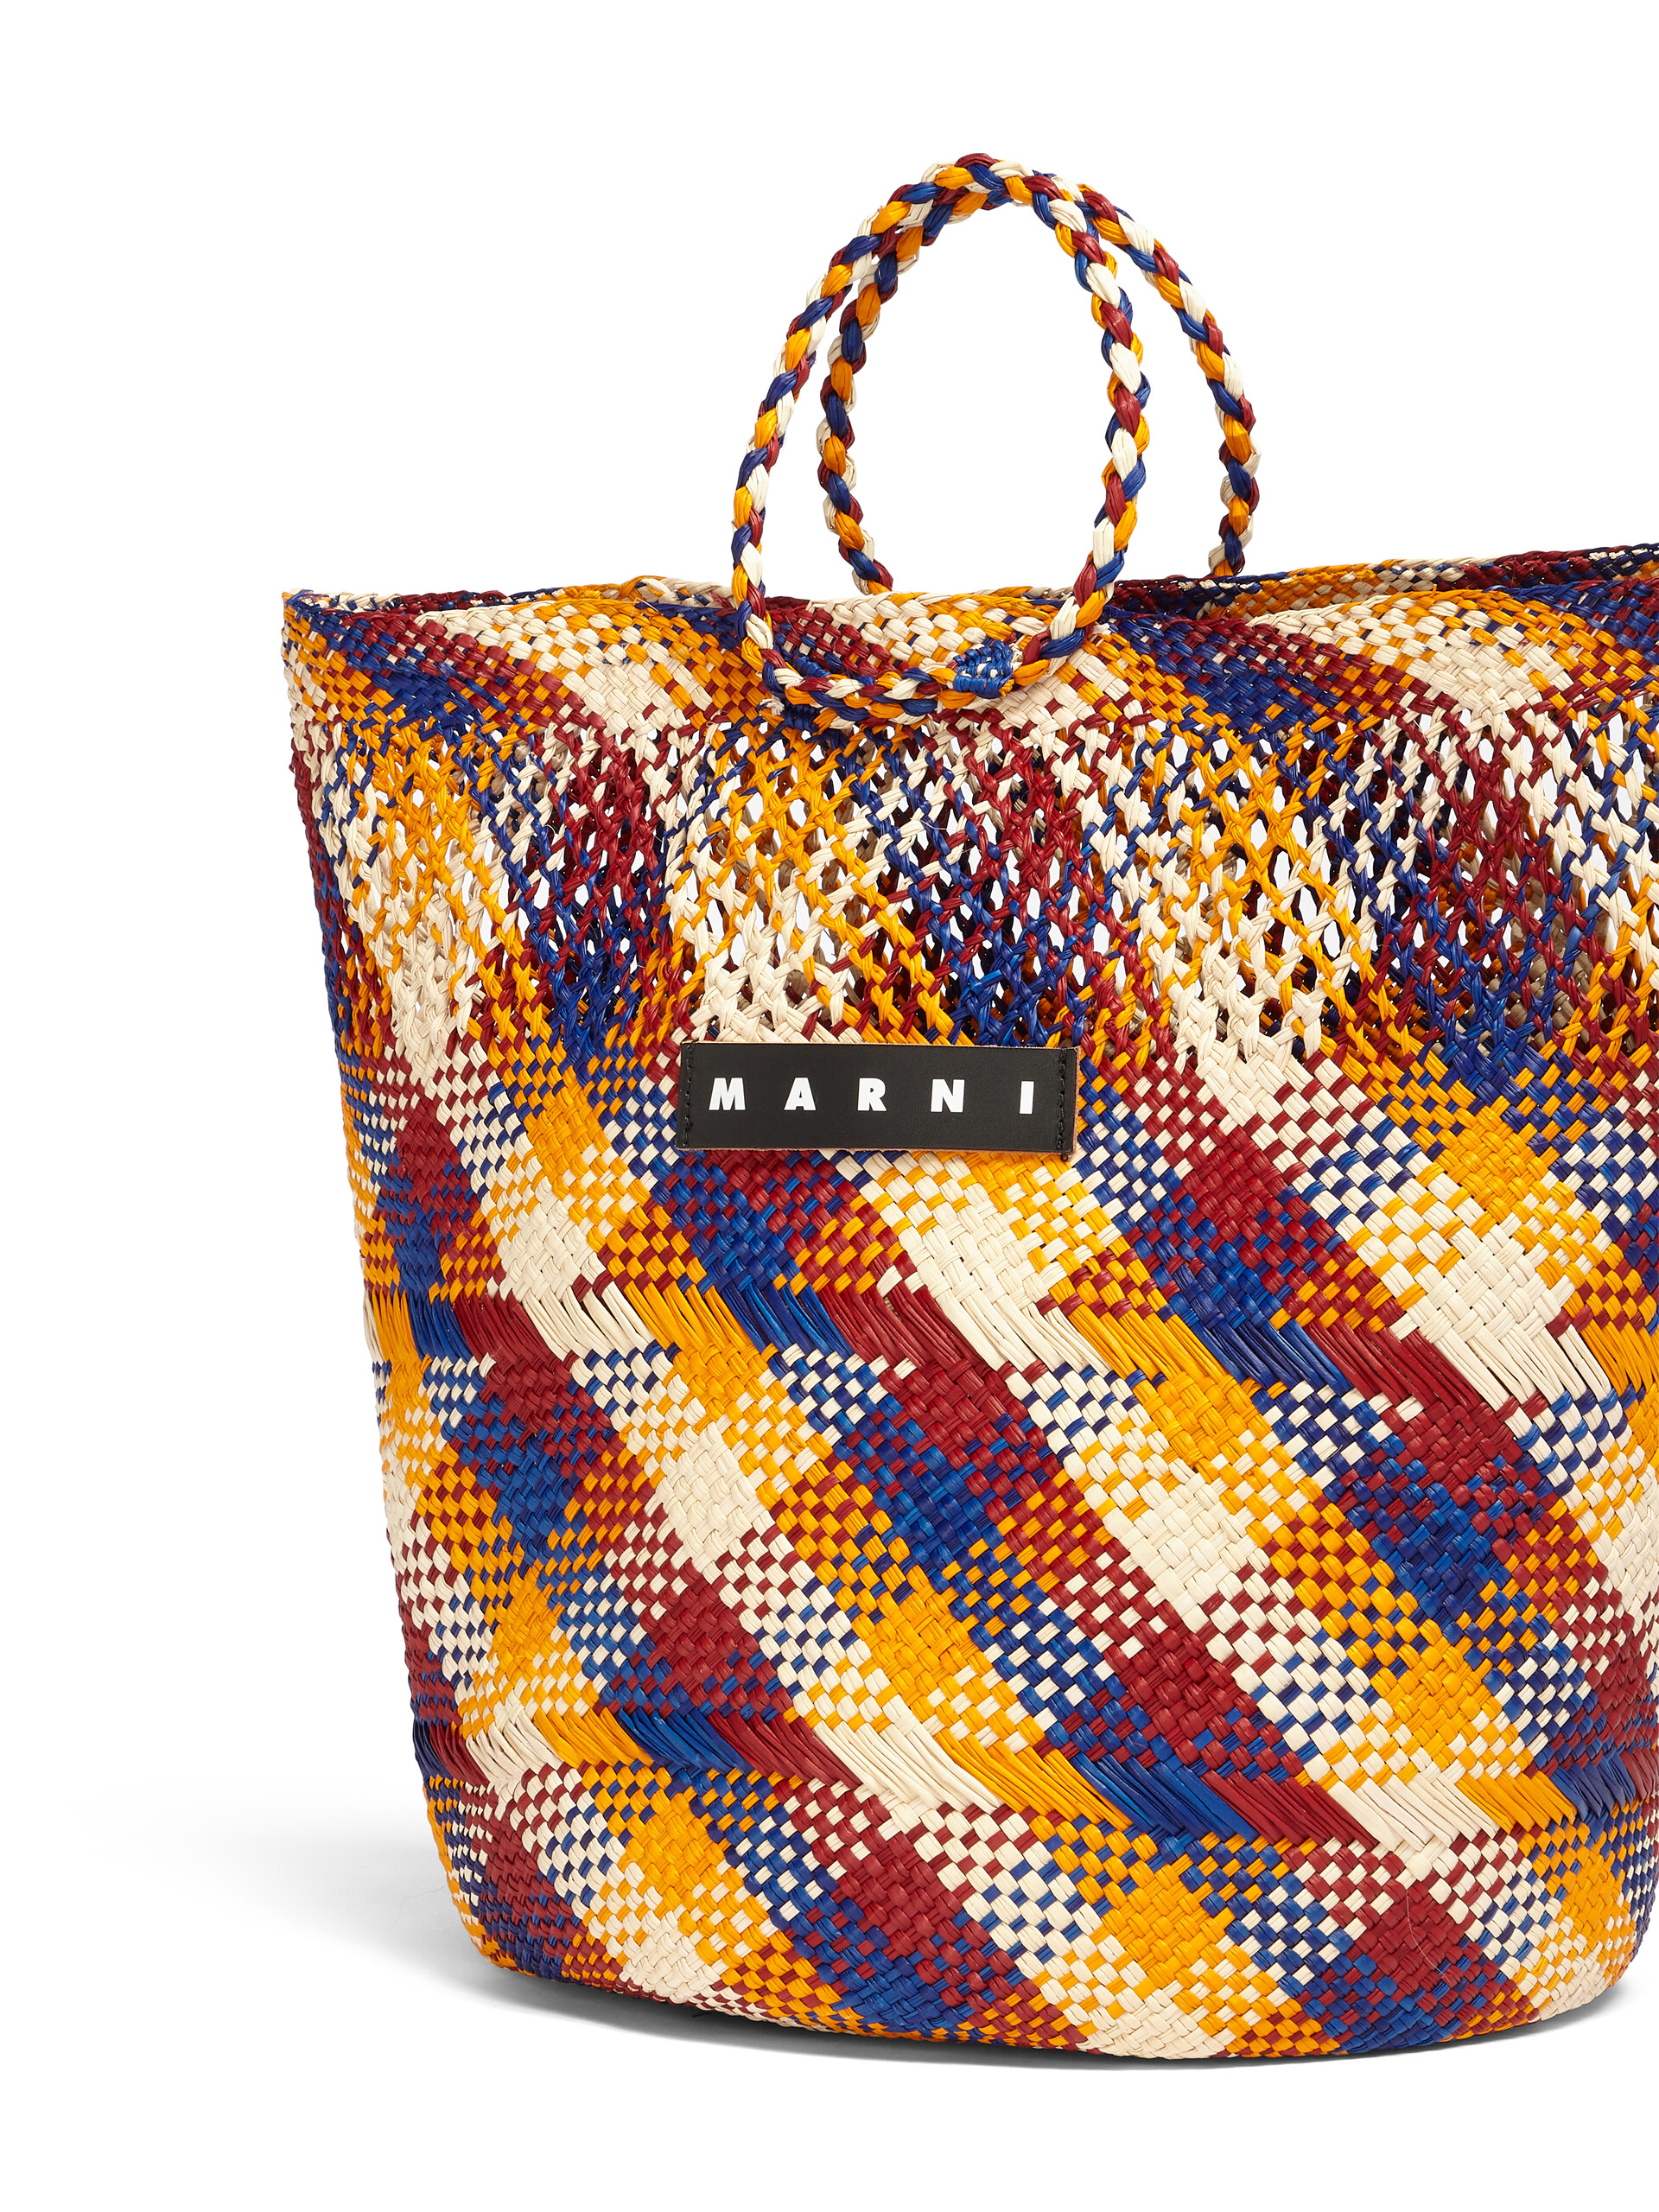 Marni Tote Shopping Bag | Liberty